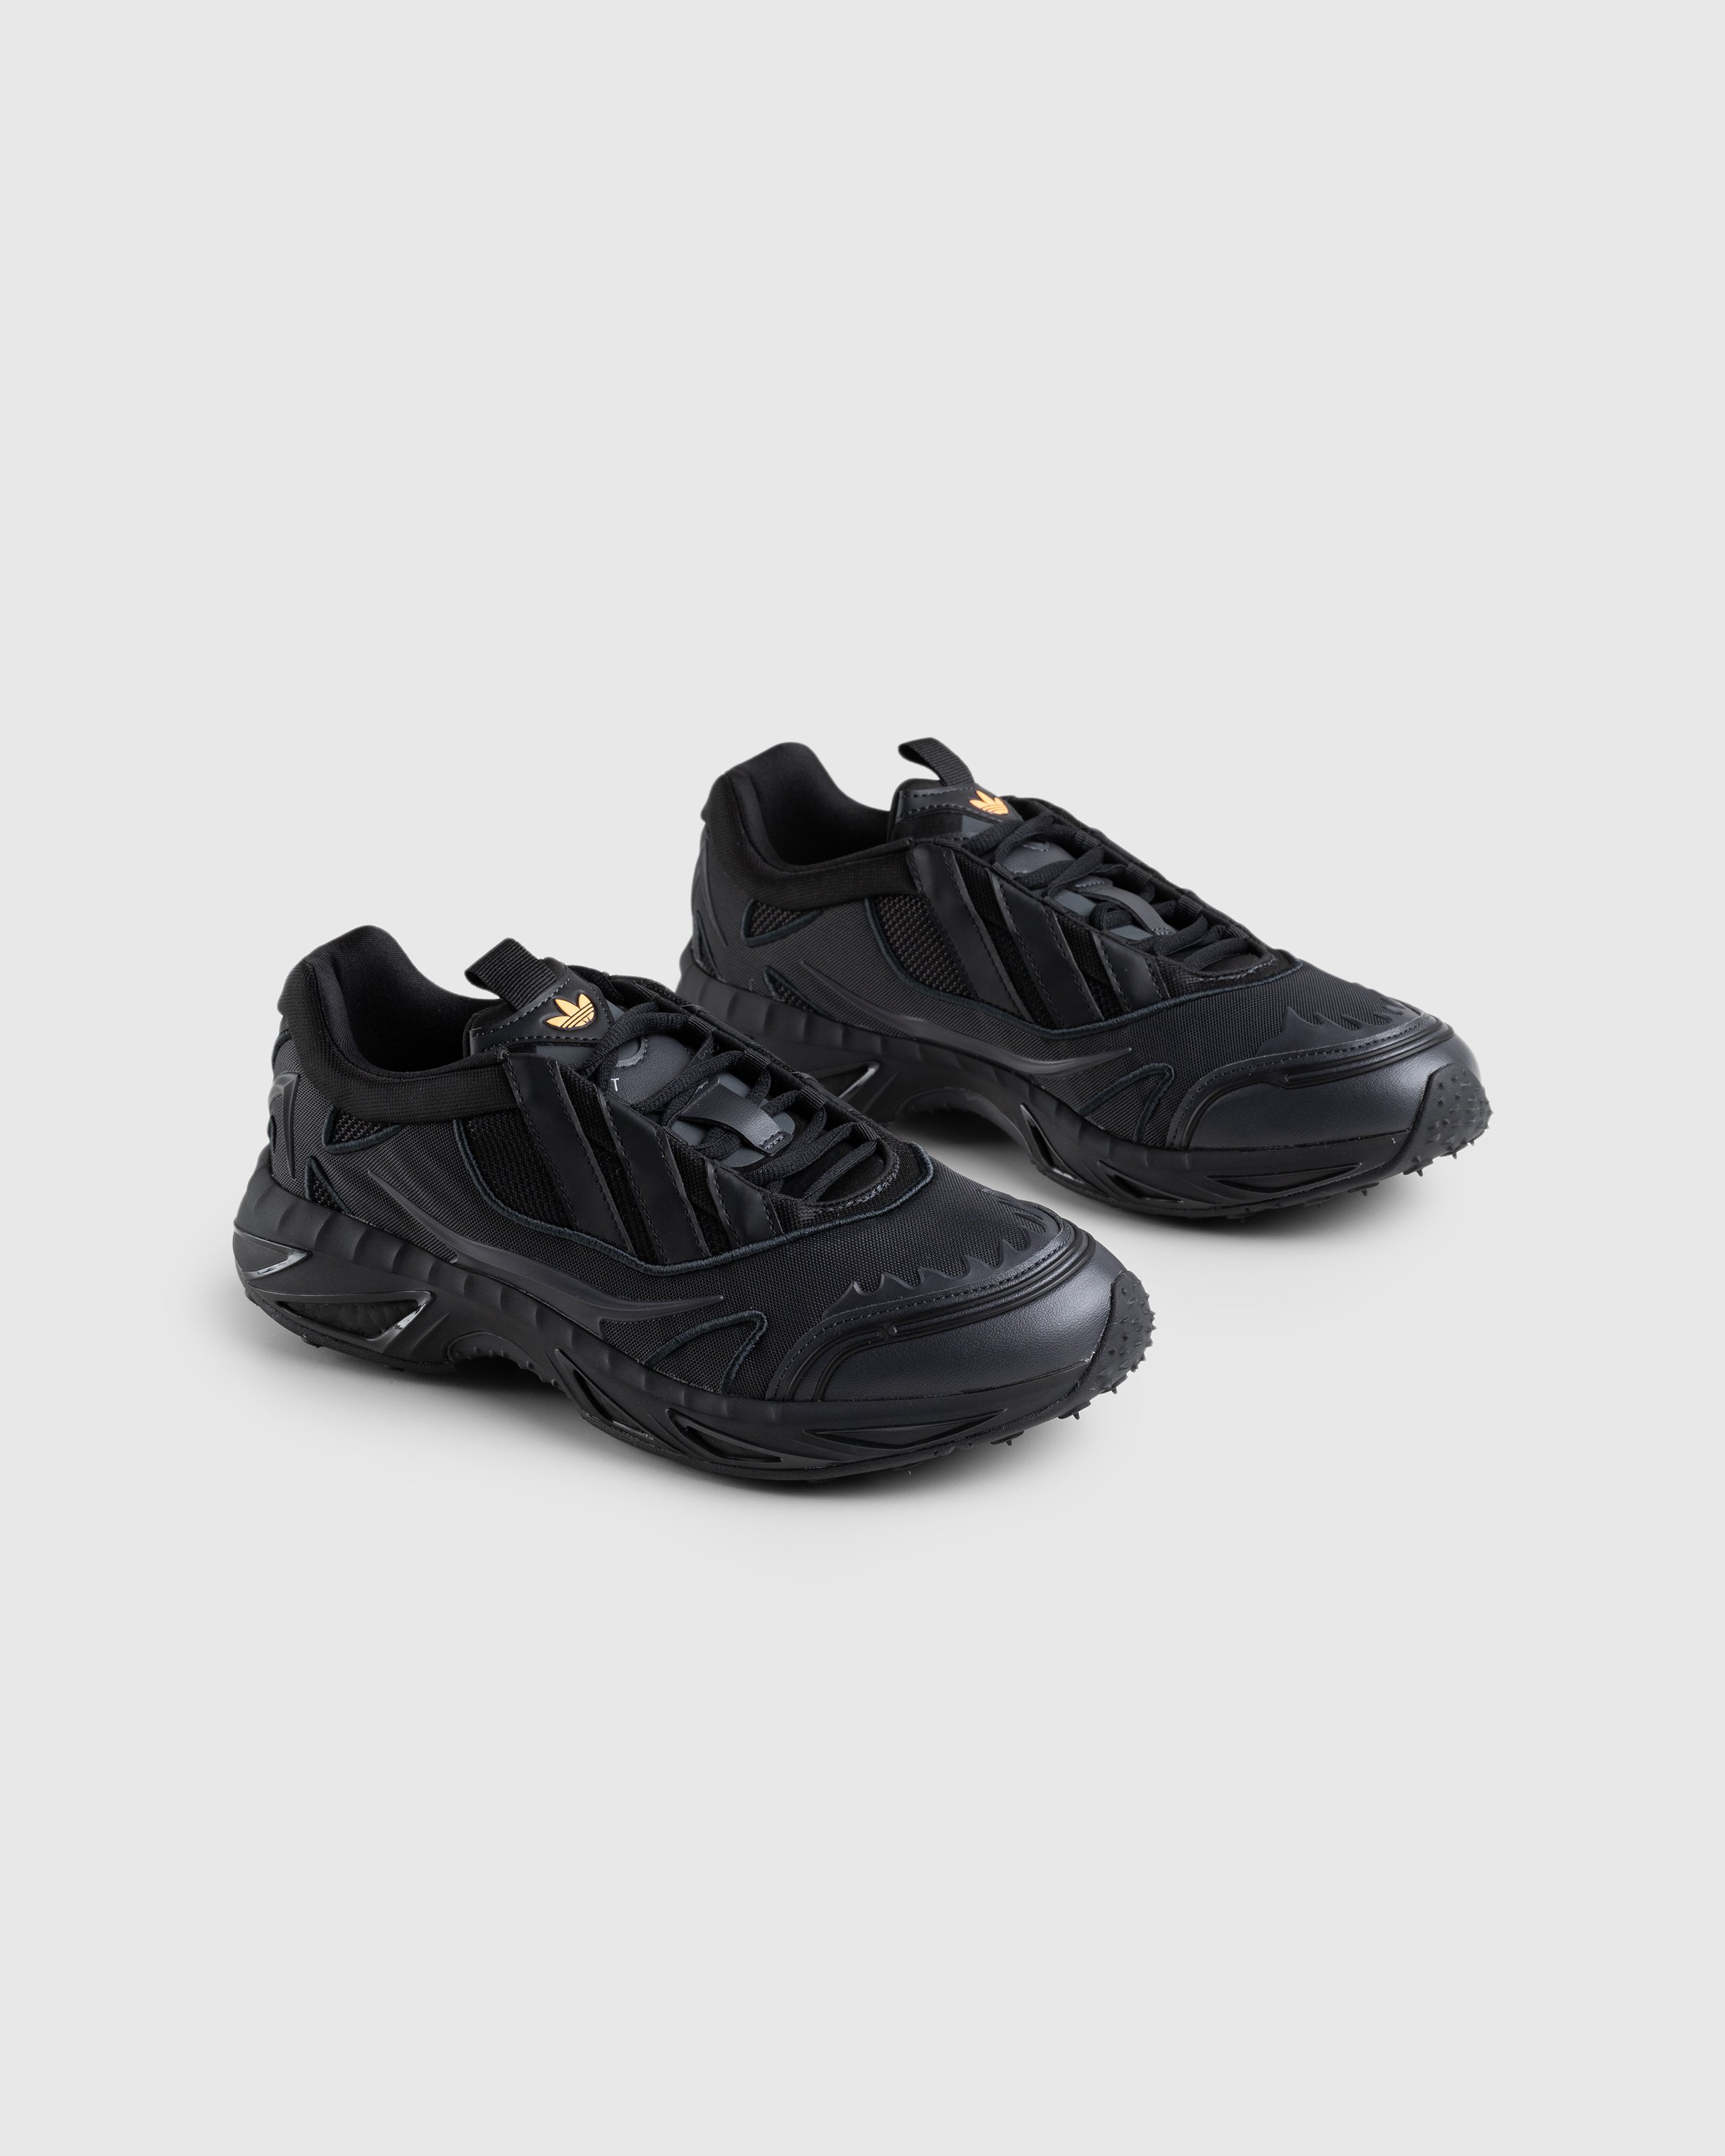 Adidas - Xare Boost Black - Footwear - Black - Image 2